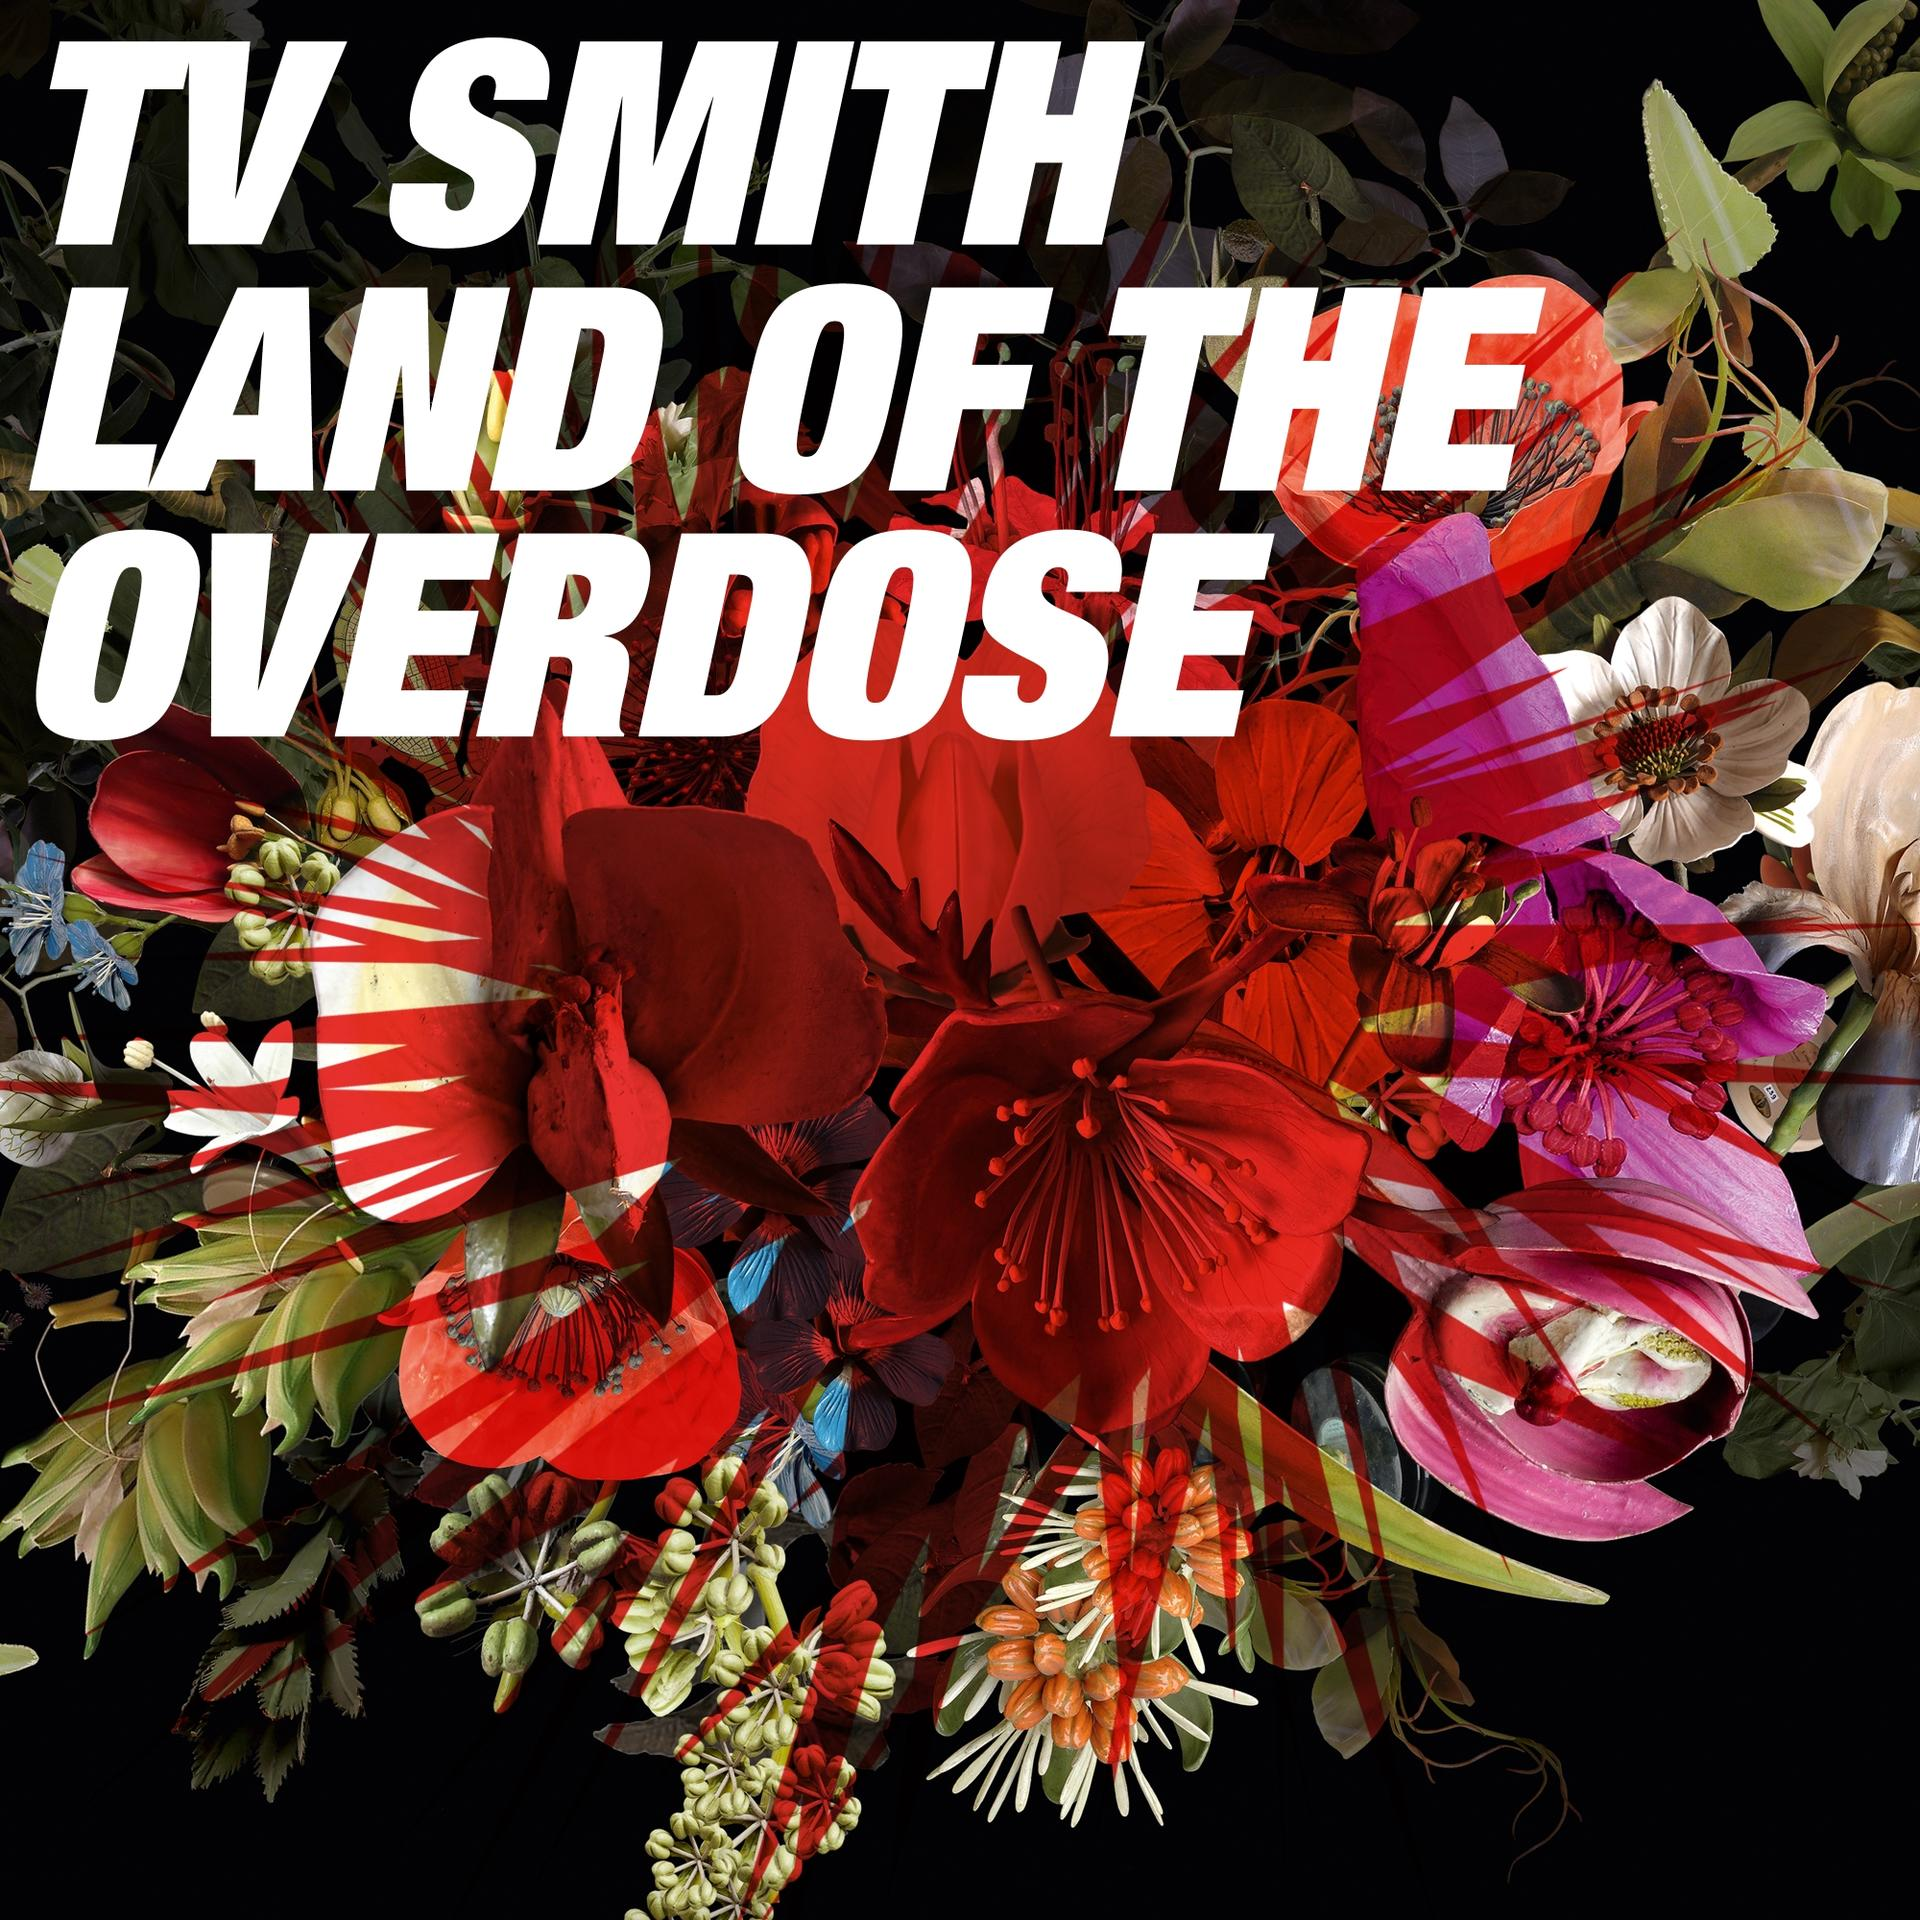 T.V. Smith - Land (CD) the of - Overdose